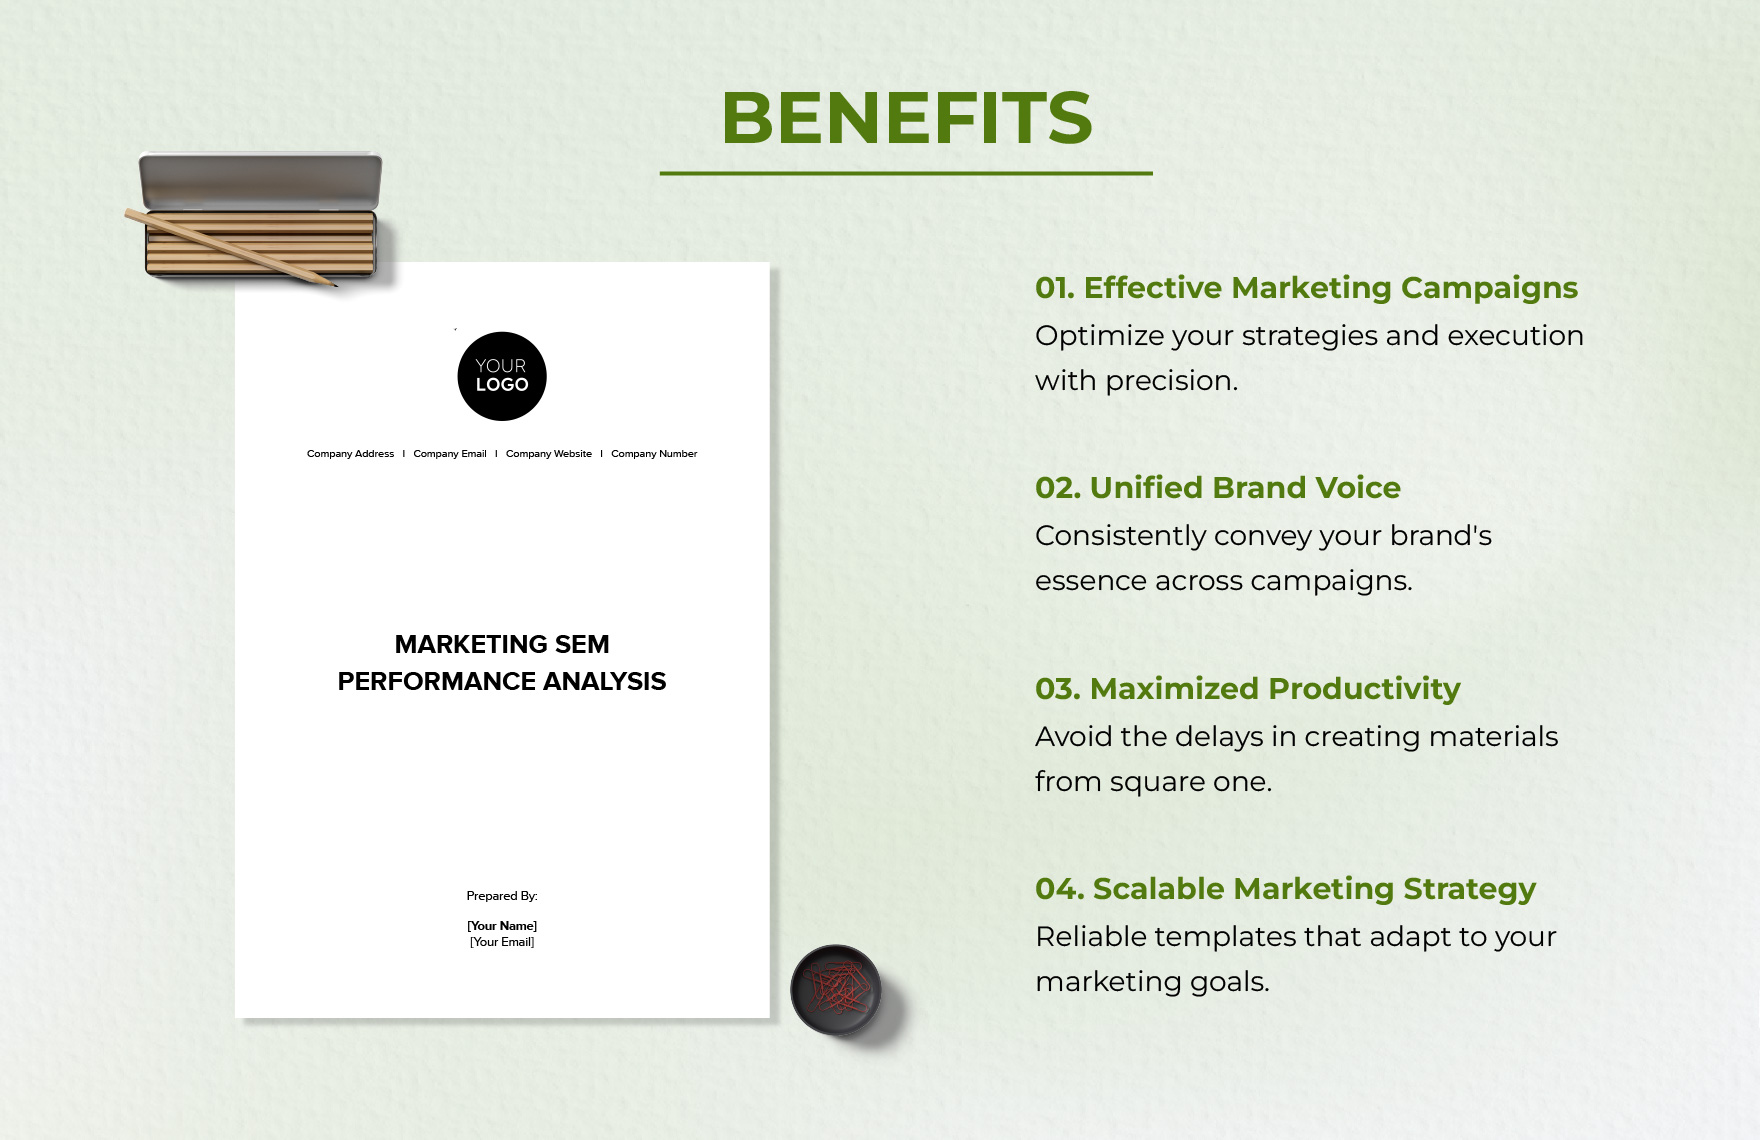 Marketing SEM Performance Analysis Template